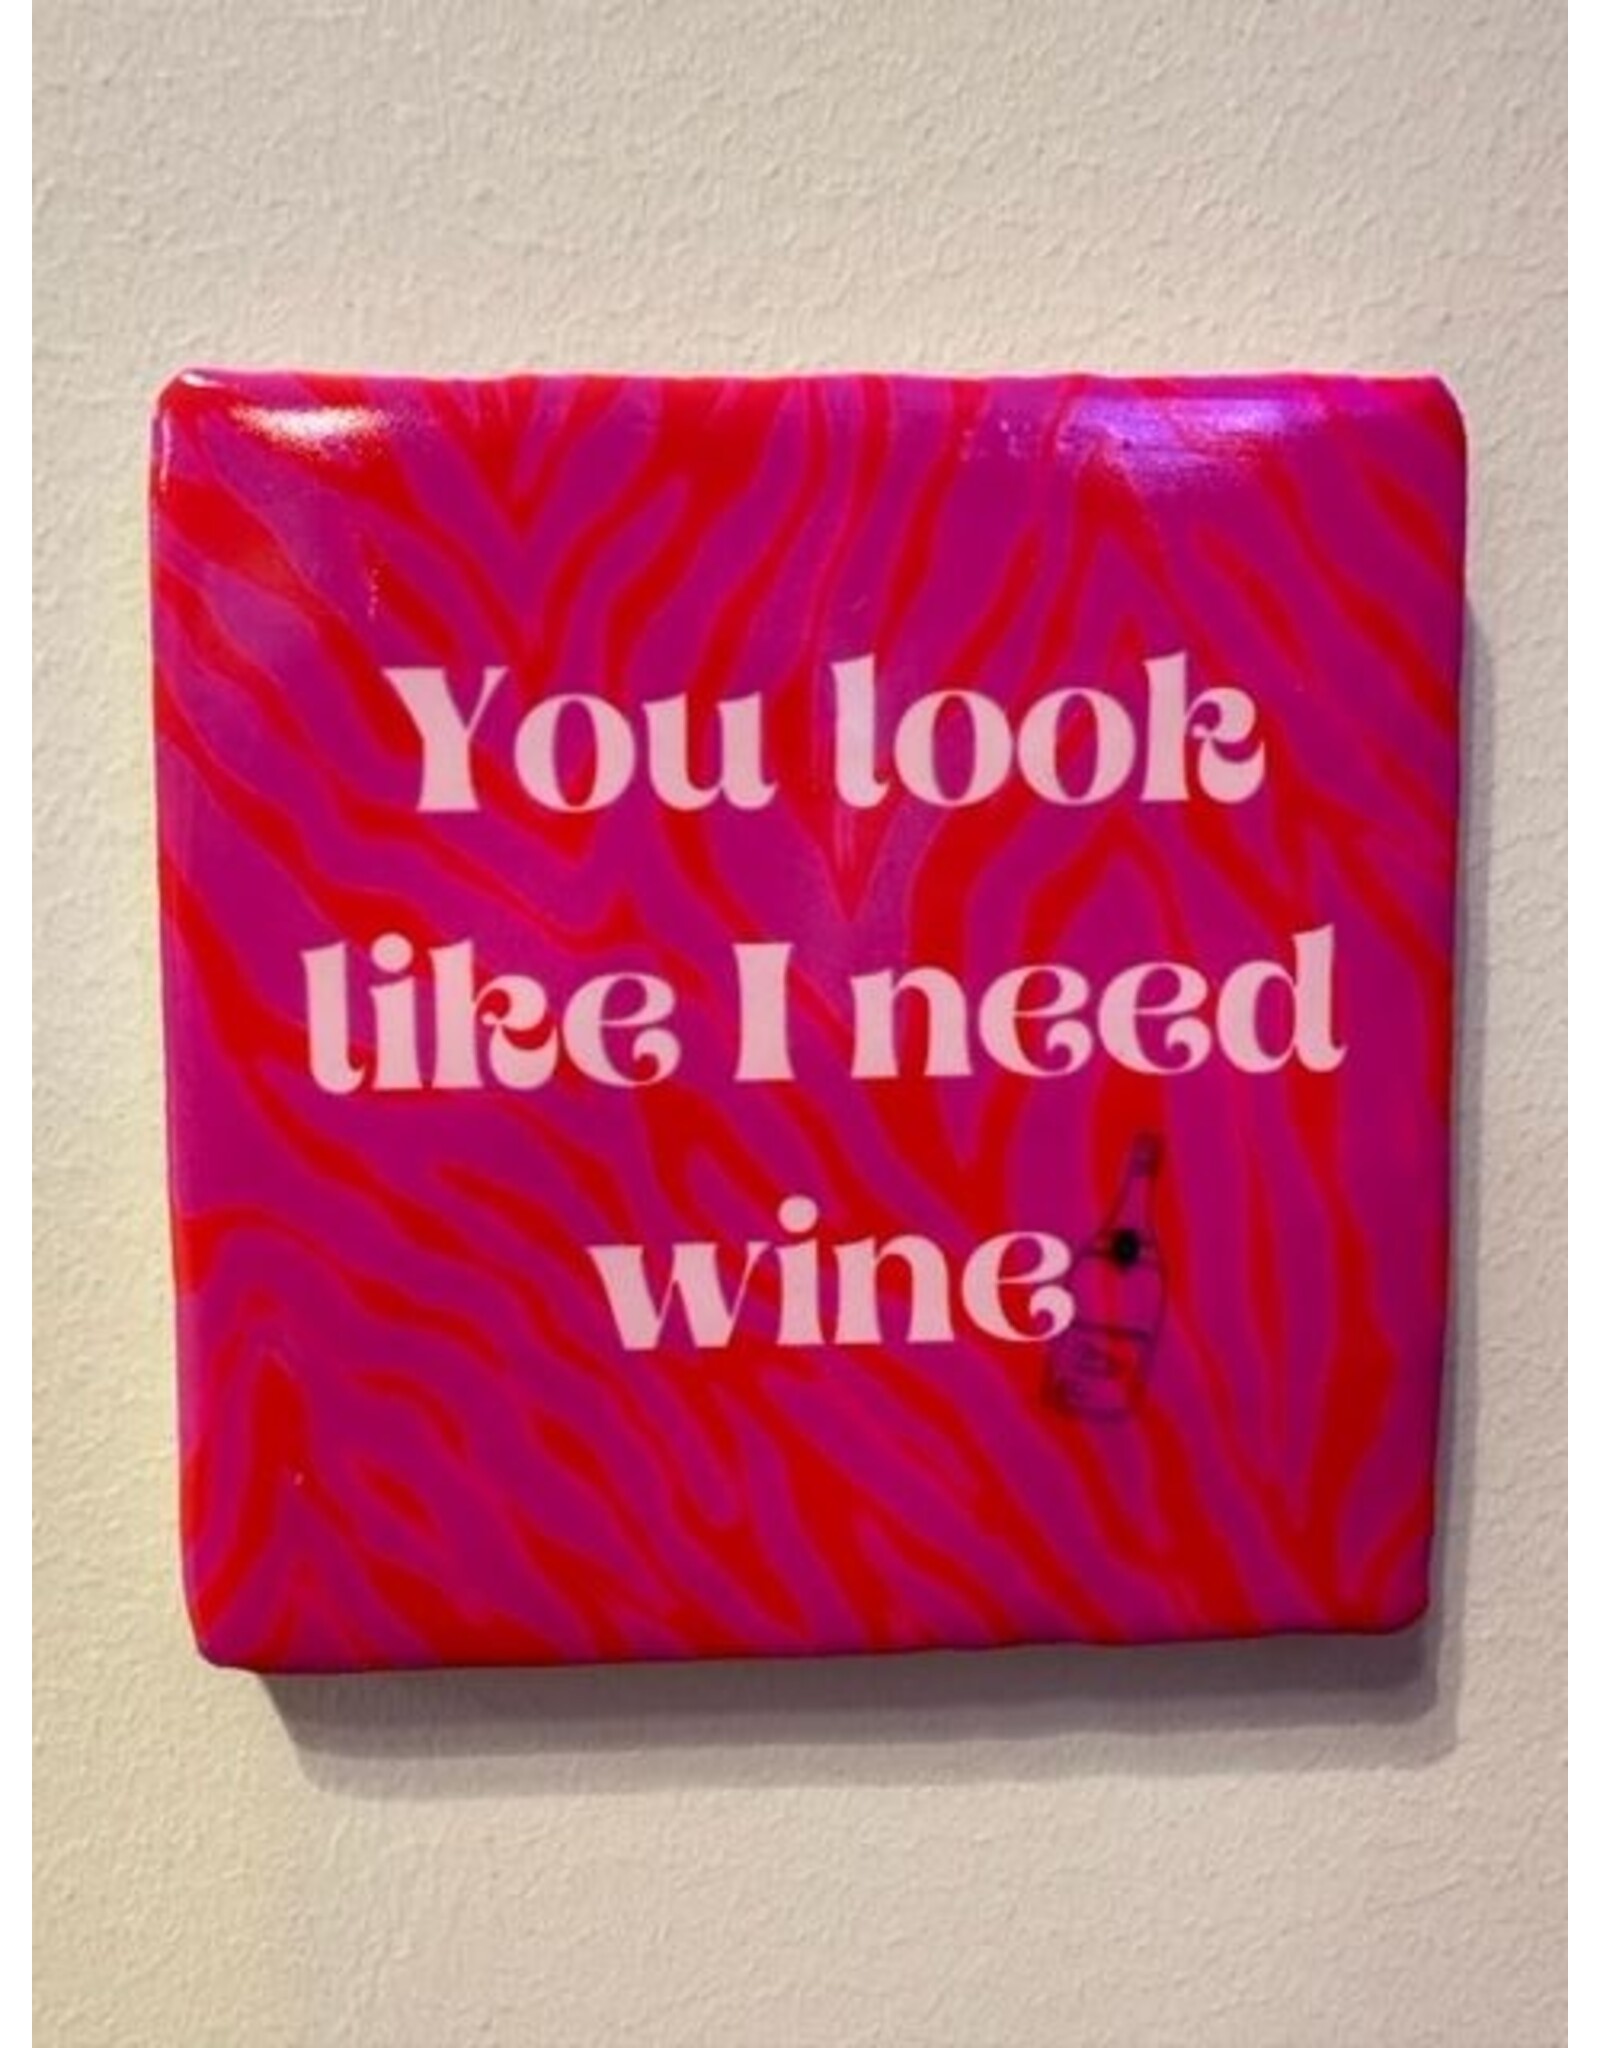 You look like wine